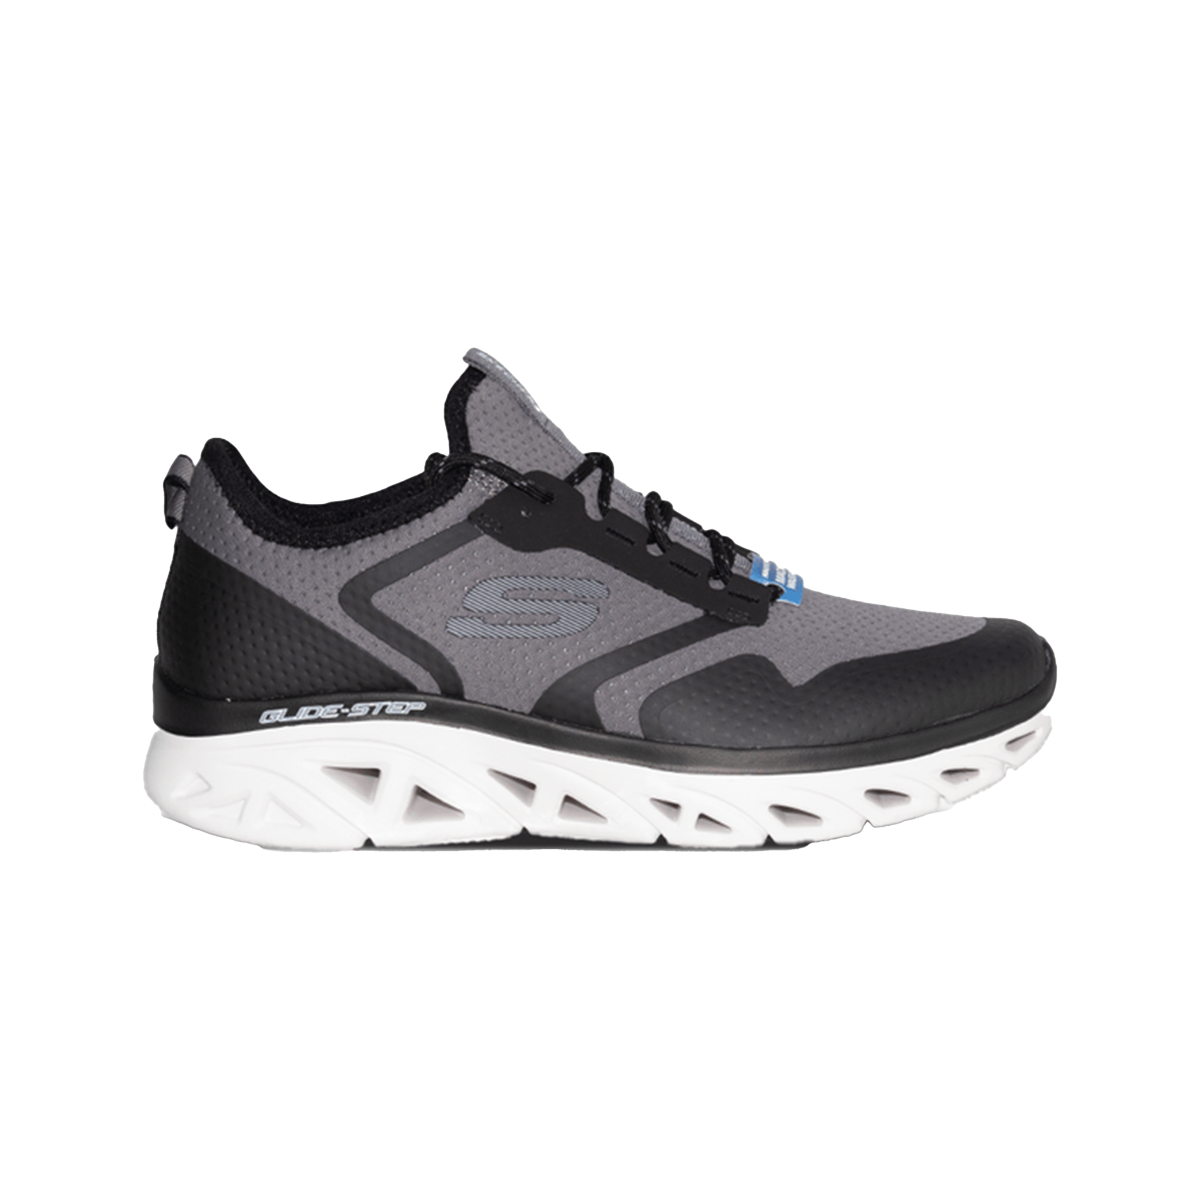 Skechers Glide Step Sports Shoes For Men, Charcoal Black